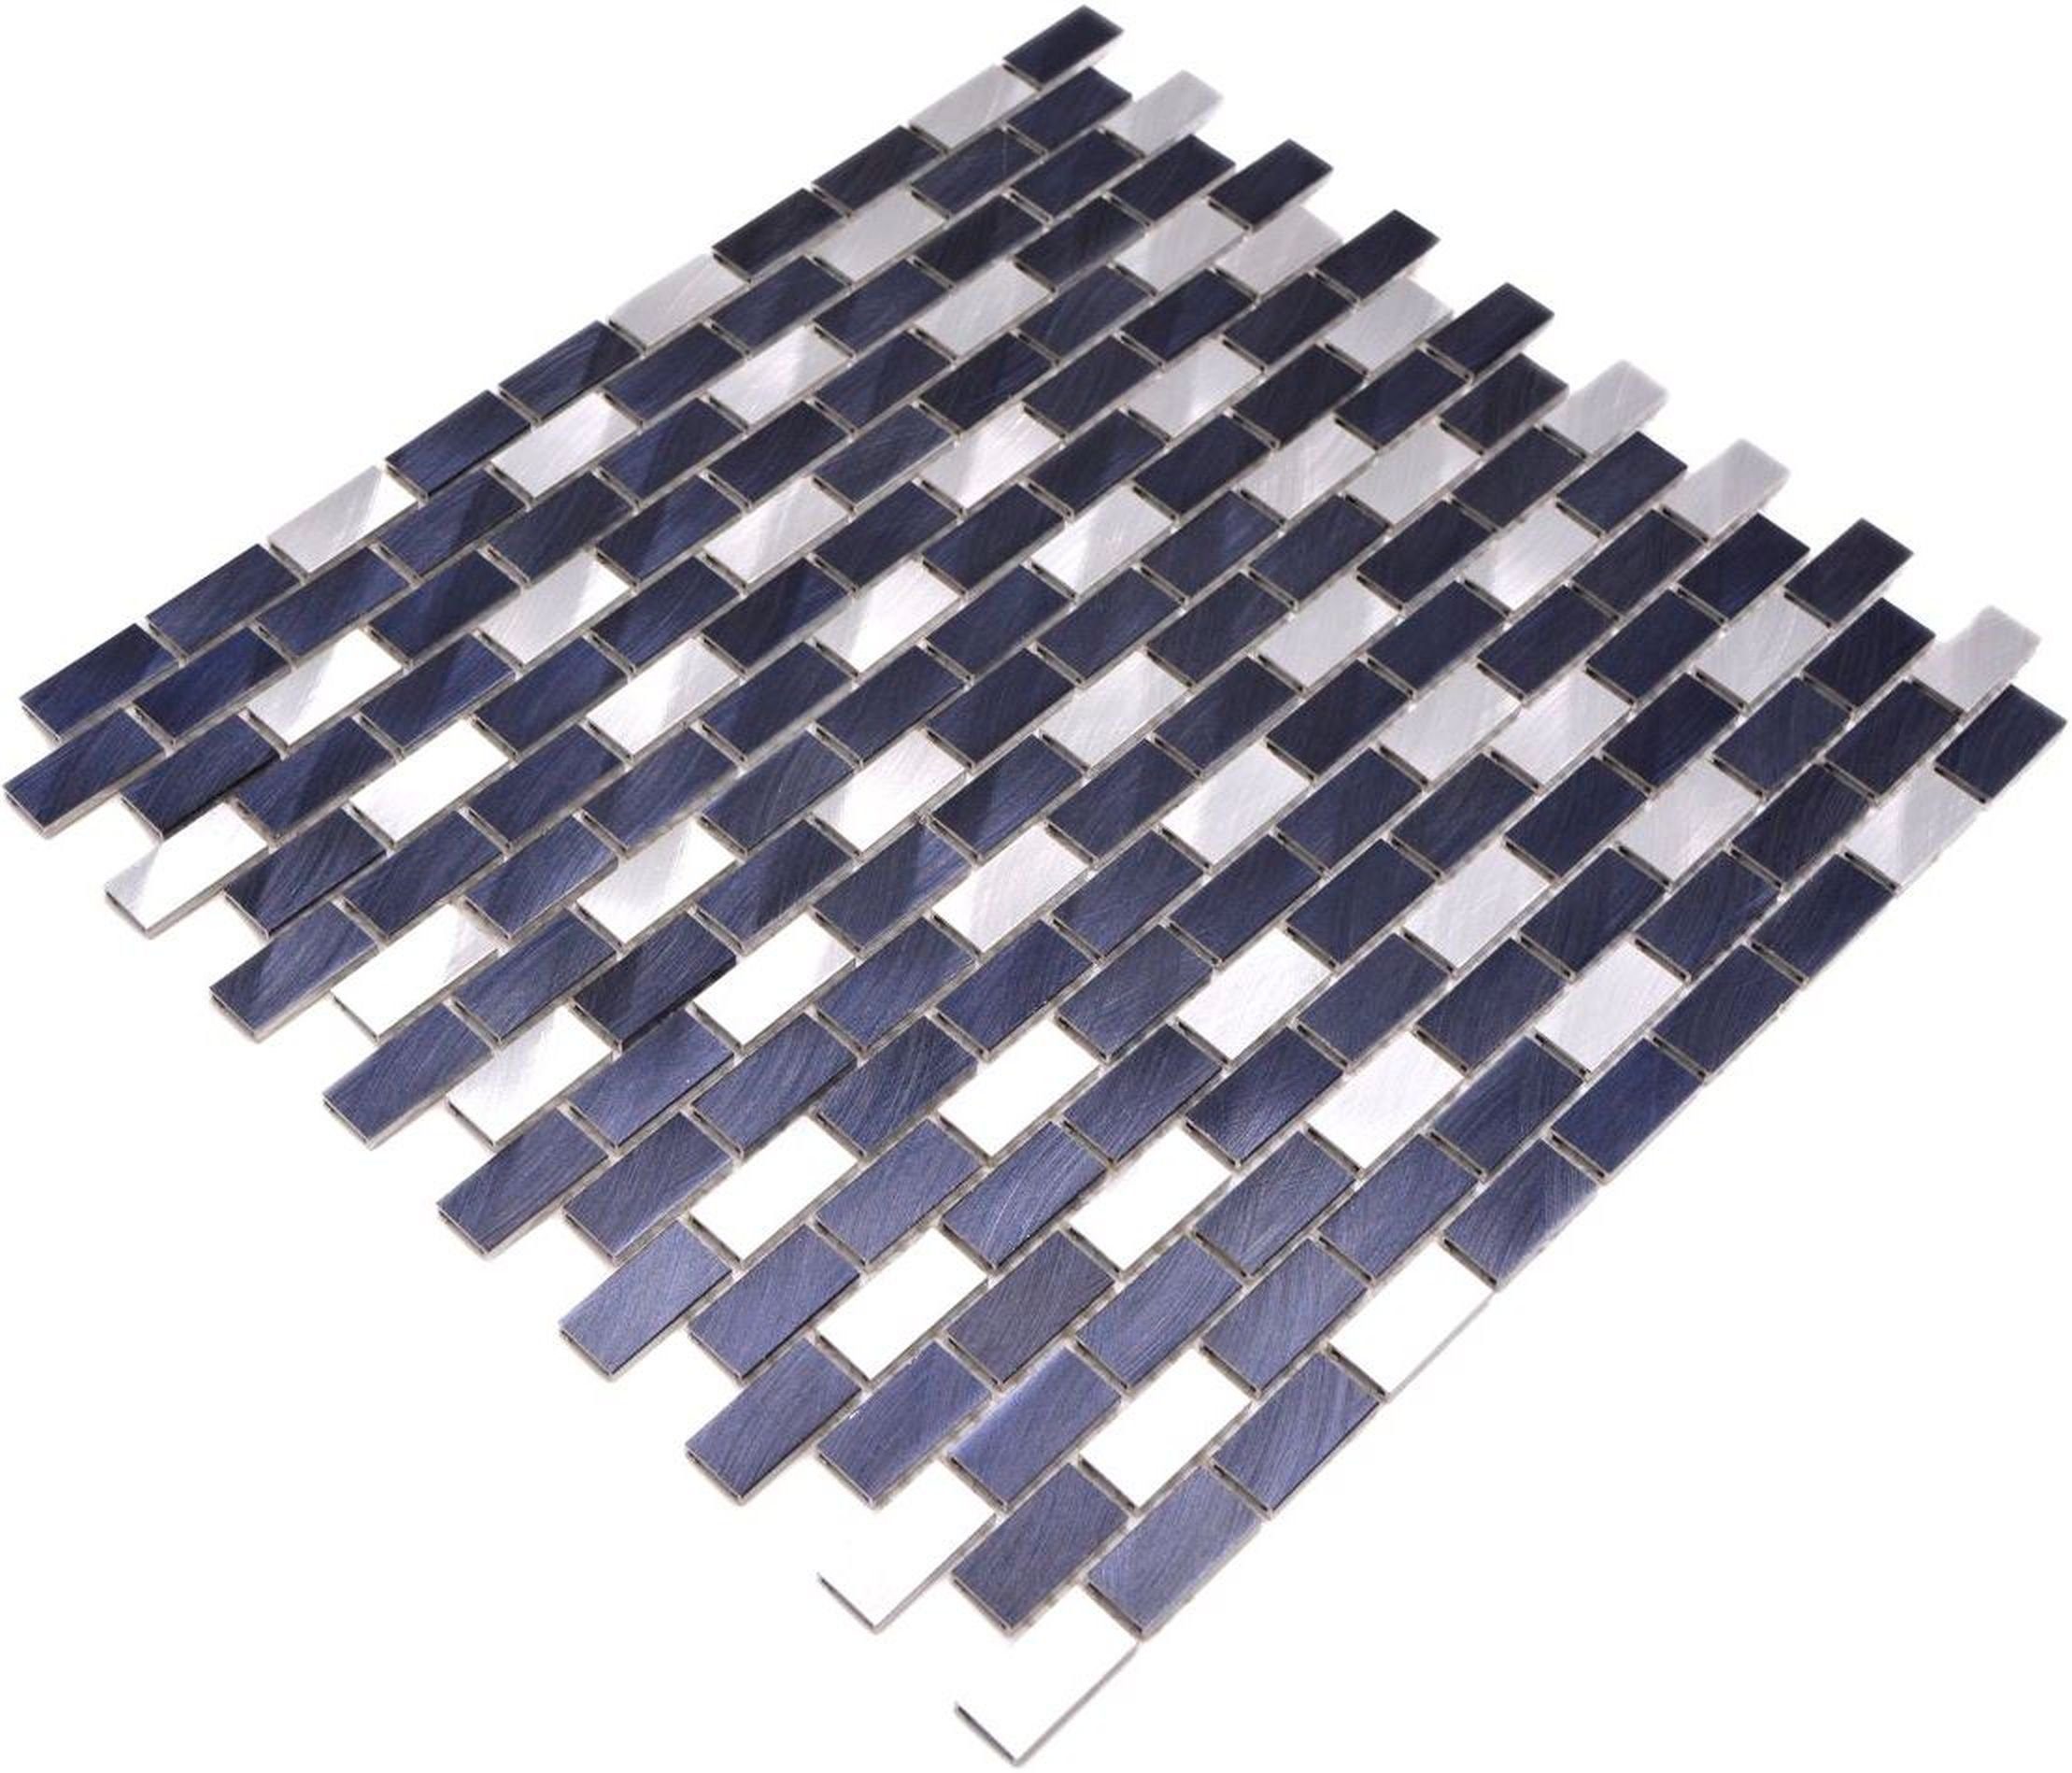 Mosani Mosaikfliesen Mosaik Fliese Aluminium schwarz Fliesenspiegel Brick Küchenwand